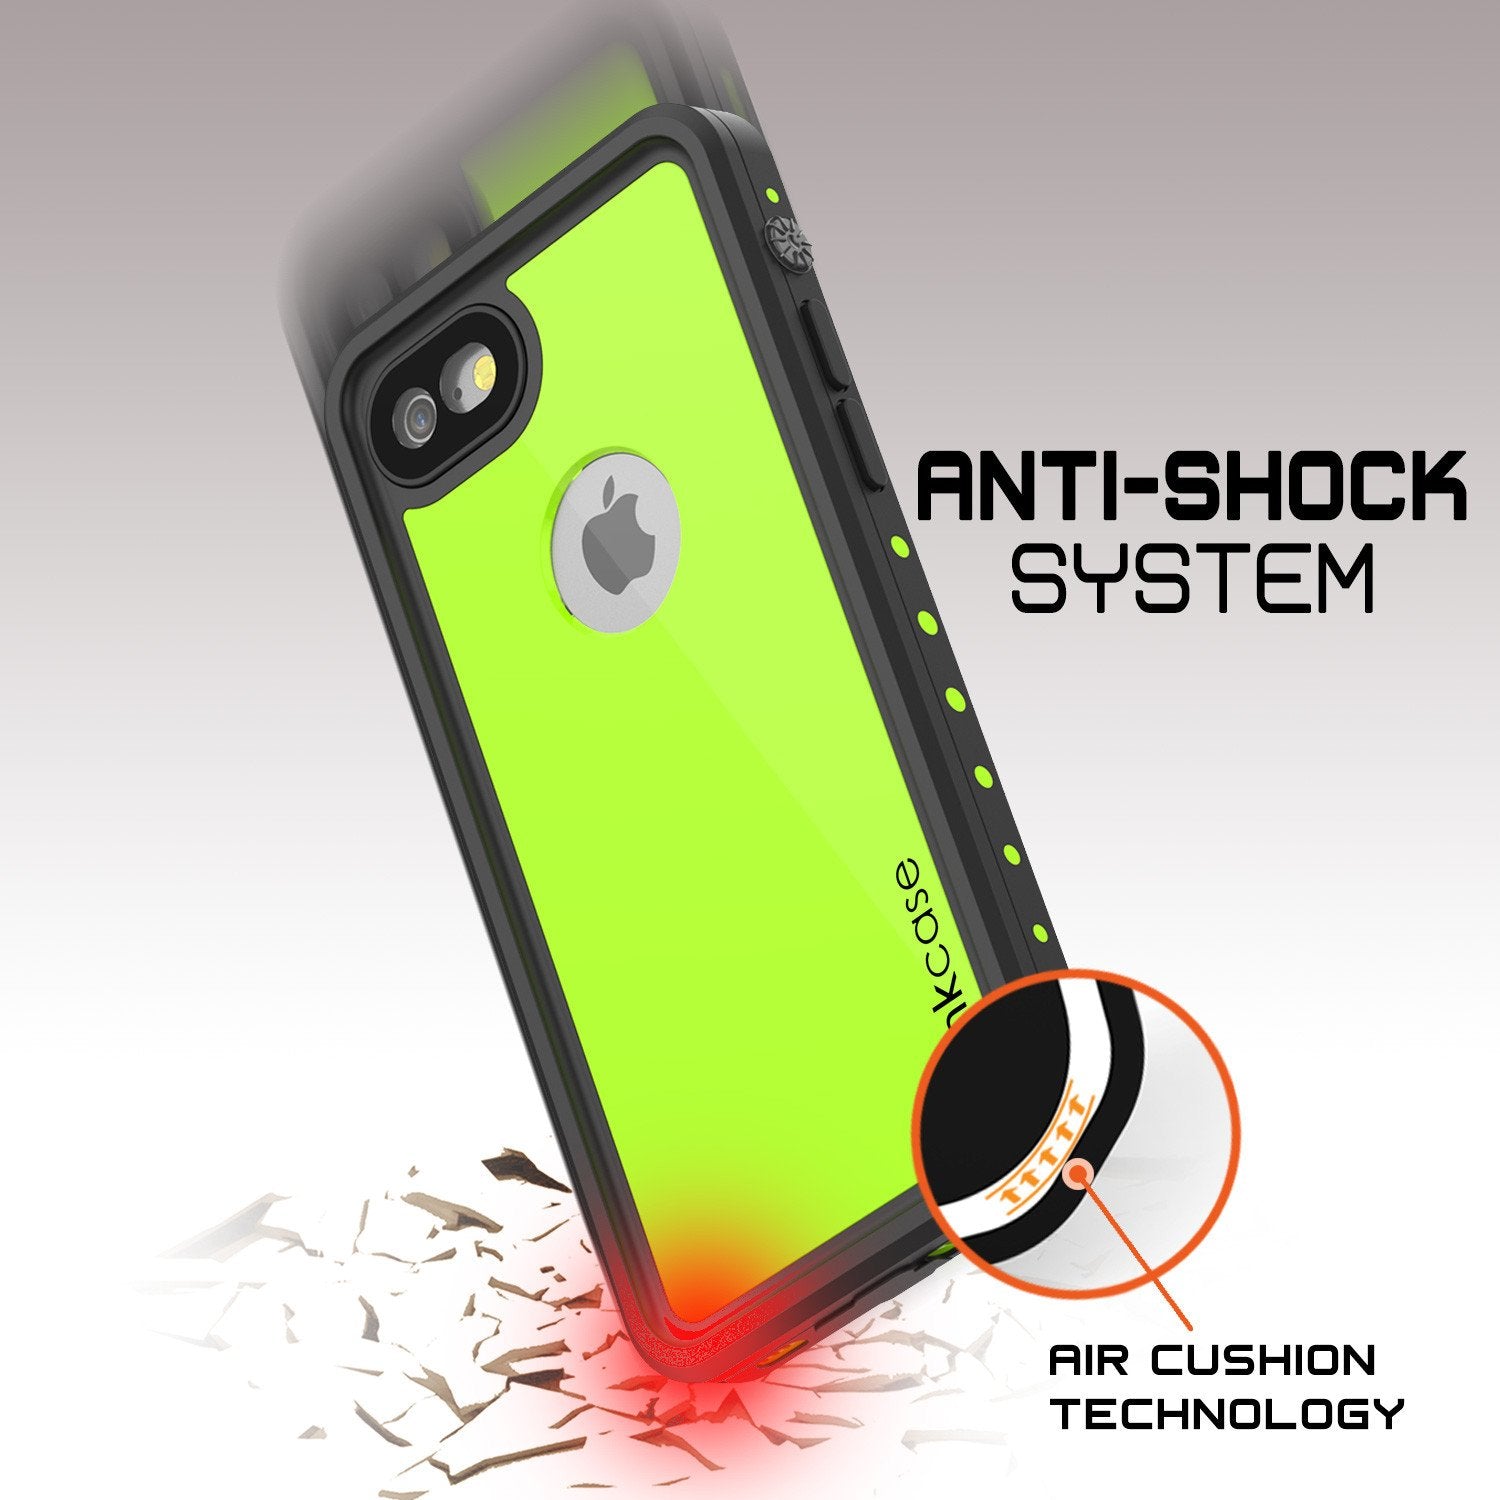 iPhone 7 Waterproof IP68 Case, Punkcase [Light Green] [StudStar Series] [Slim Fit] [Dirt/Snow Proof]